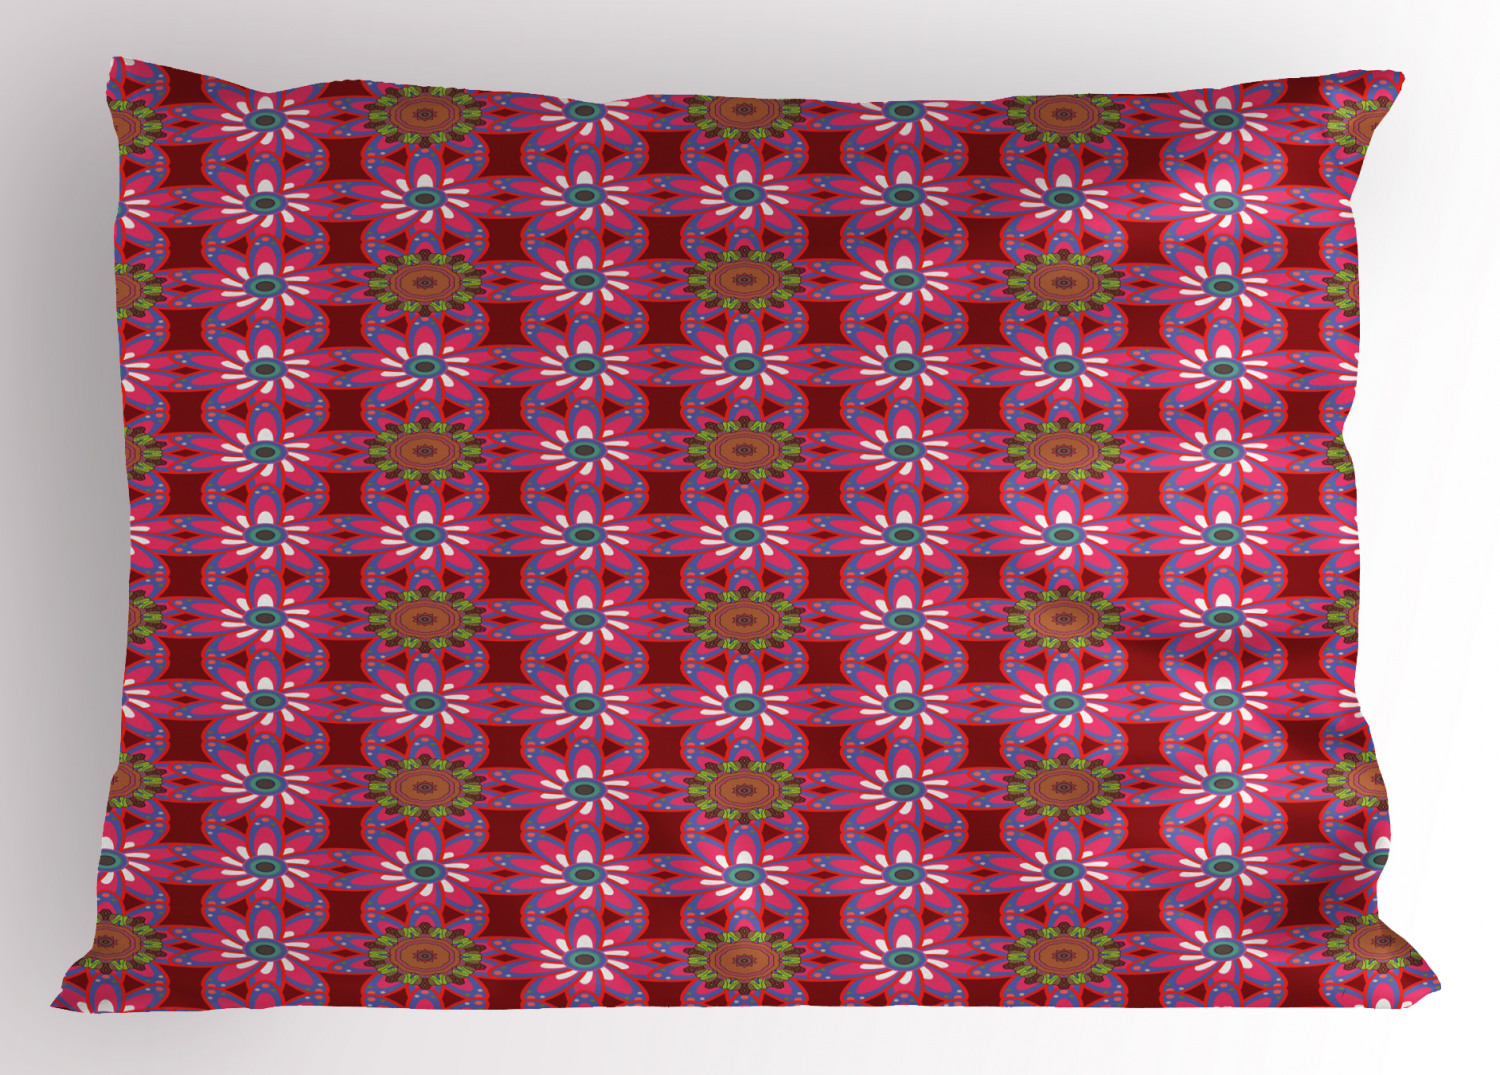 Details about   Tribal Ethnic Pillow Sham Decorative Pillowcase 3 Sizes Bedroom Decoration 